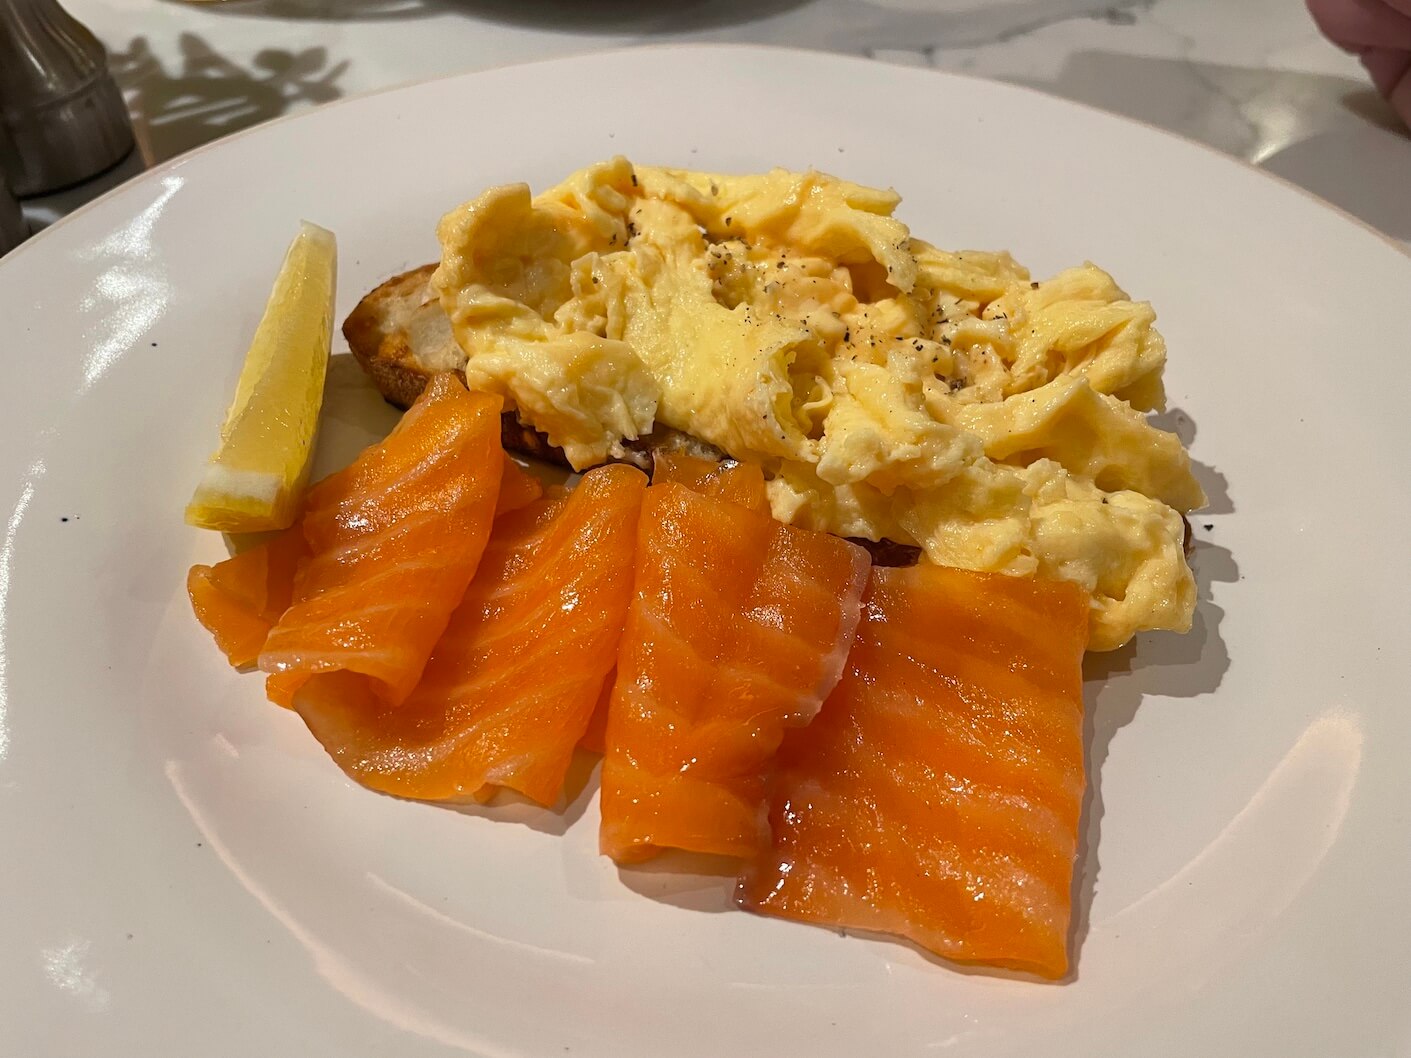 scrambled eggs and smoked salmon at Holmes hotel London